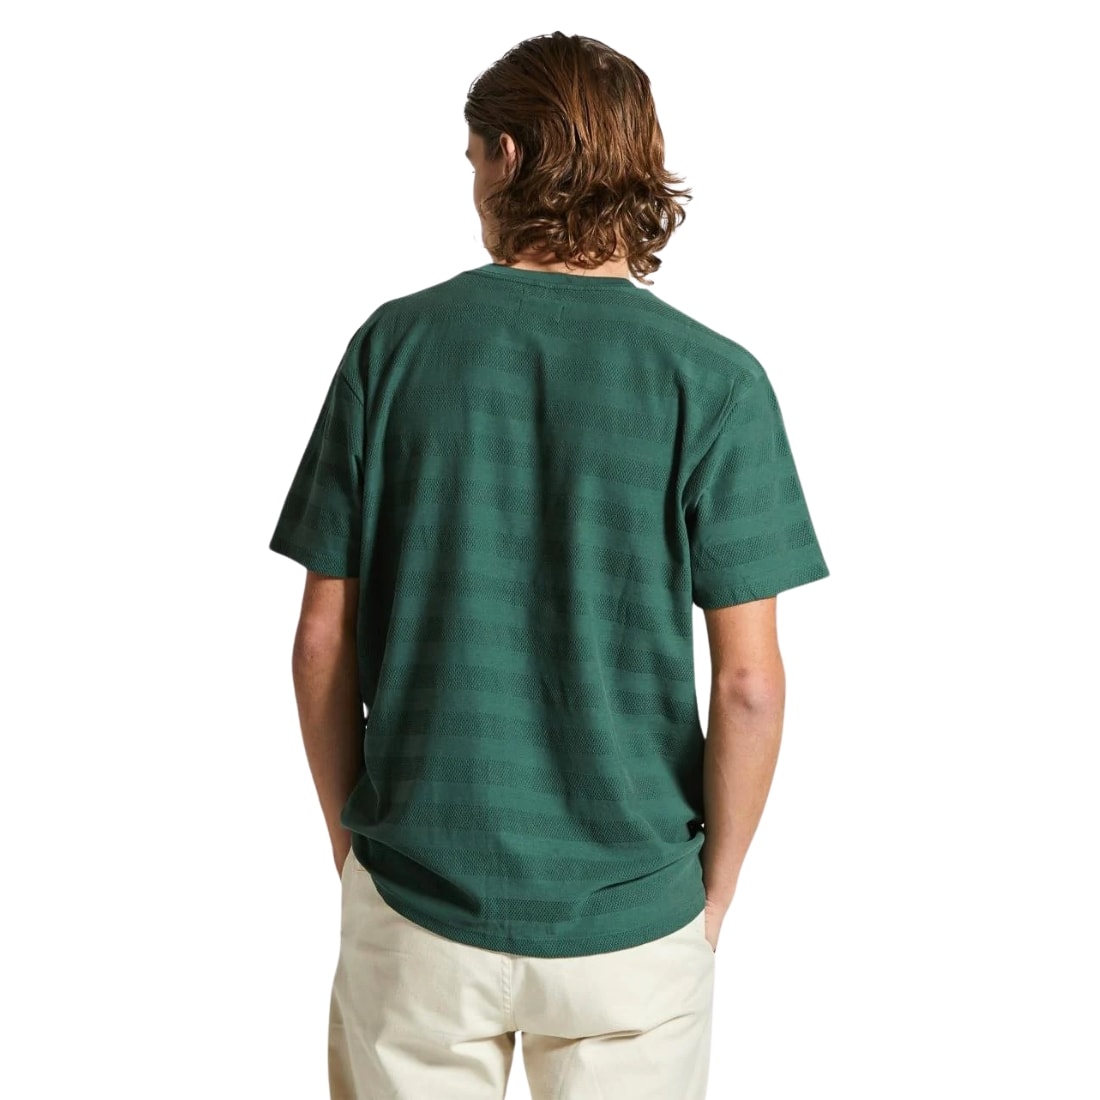 Brixton The City Knit T-Shirt - Trekking Green - Mens Plain T-Shirt by Brixton